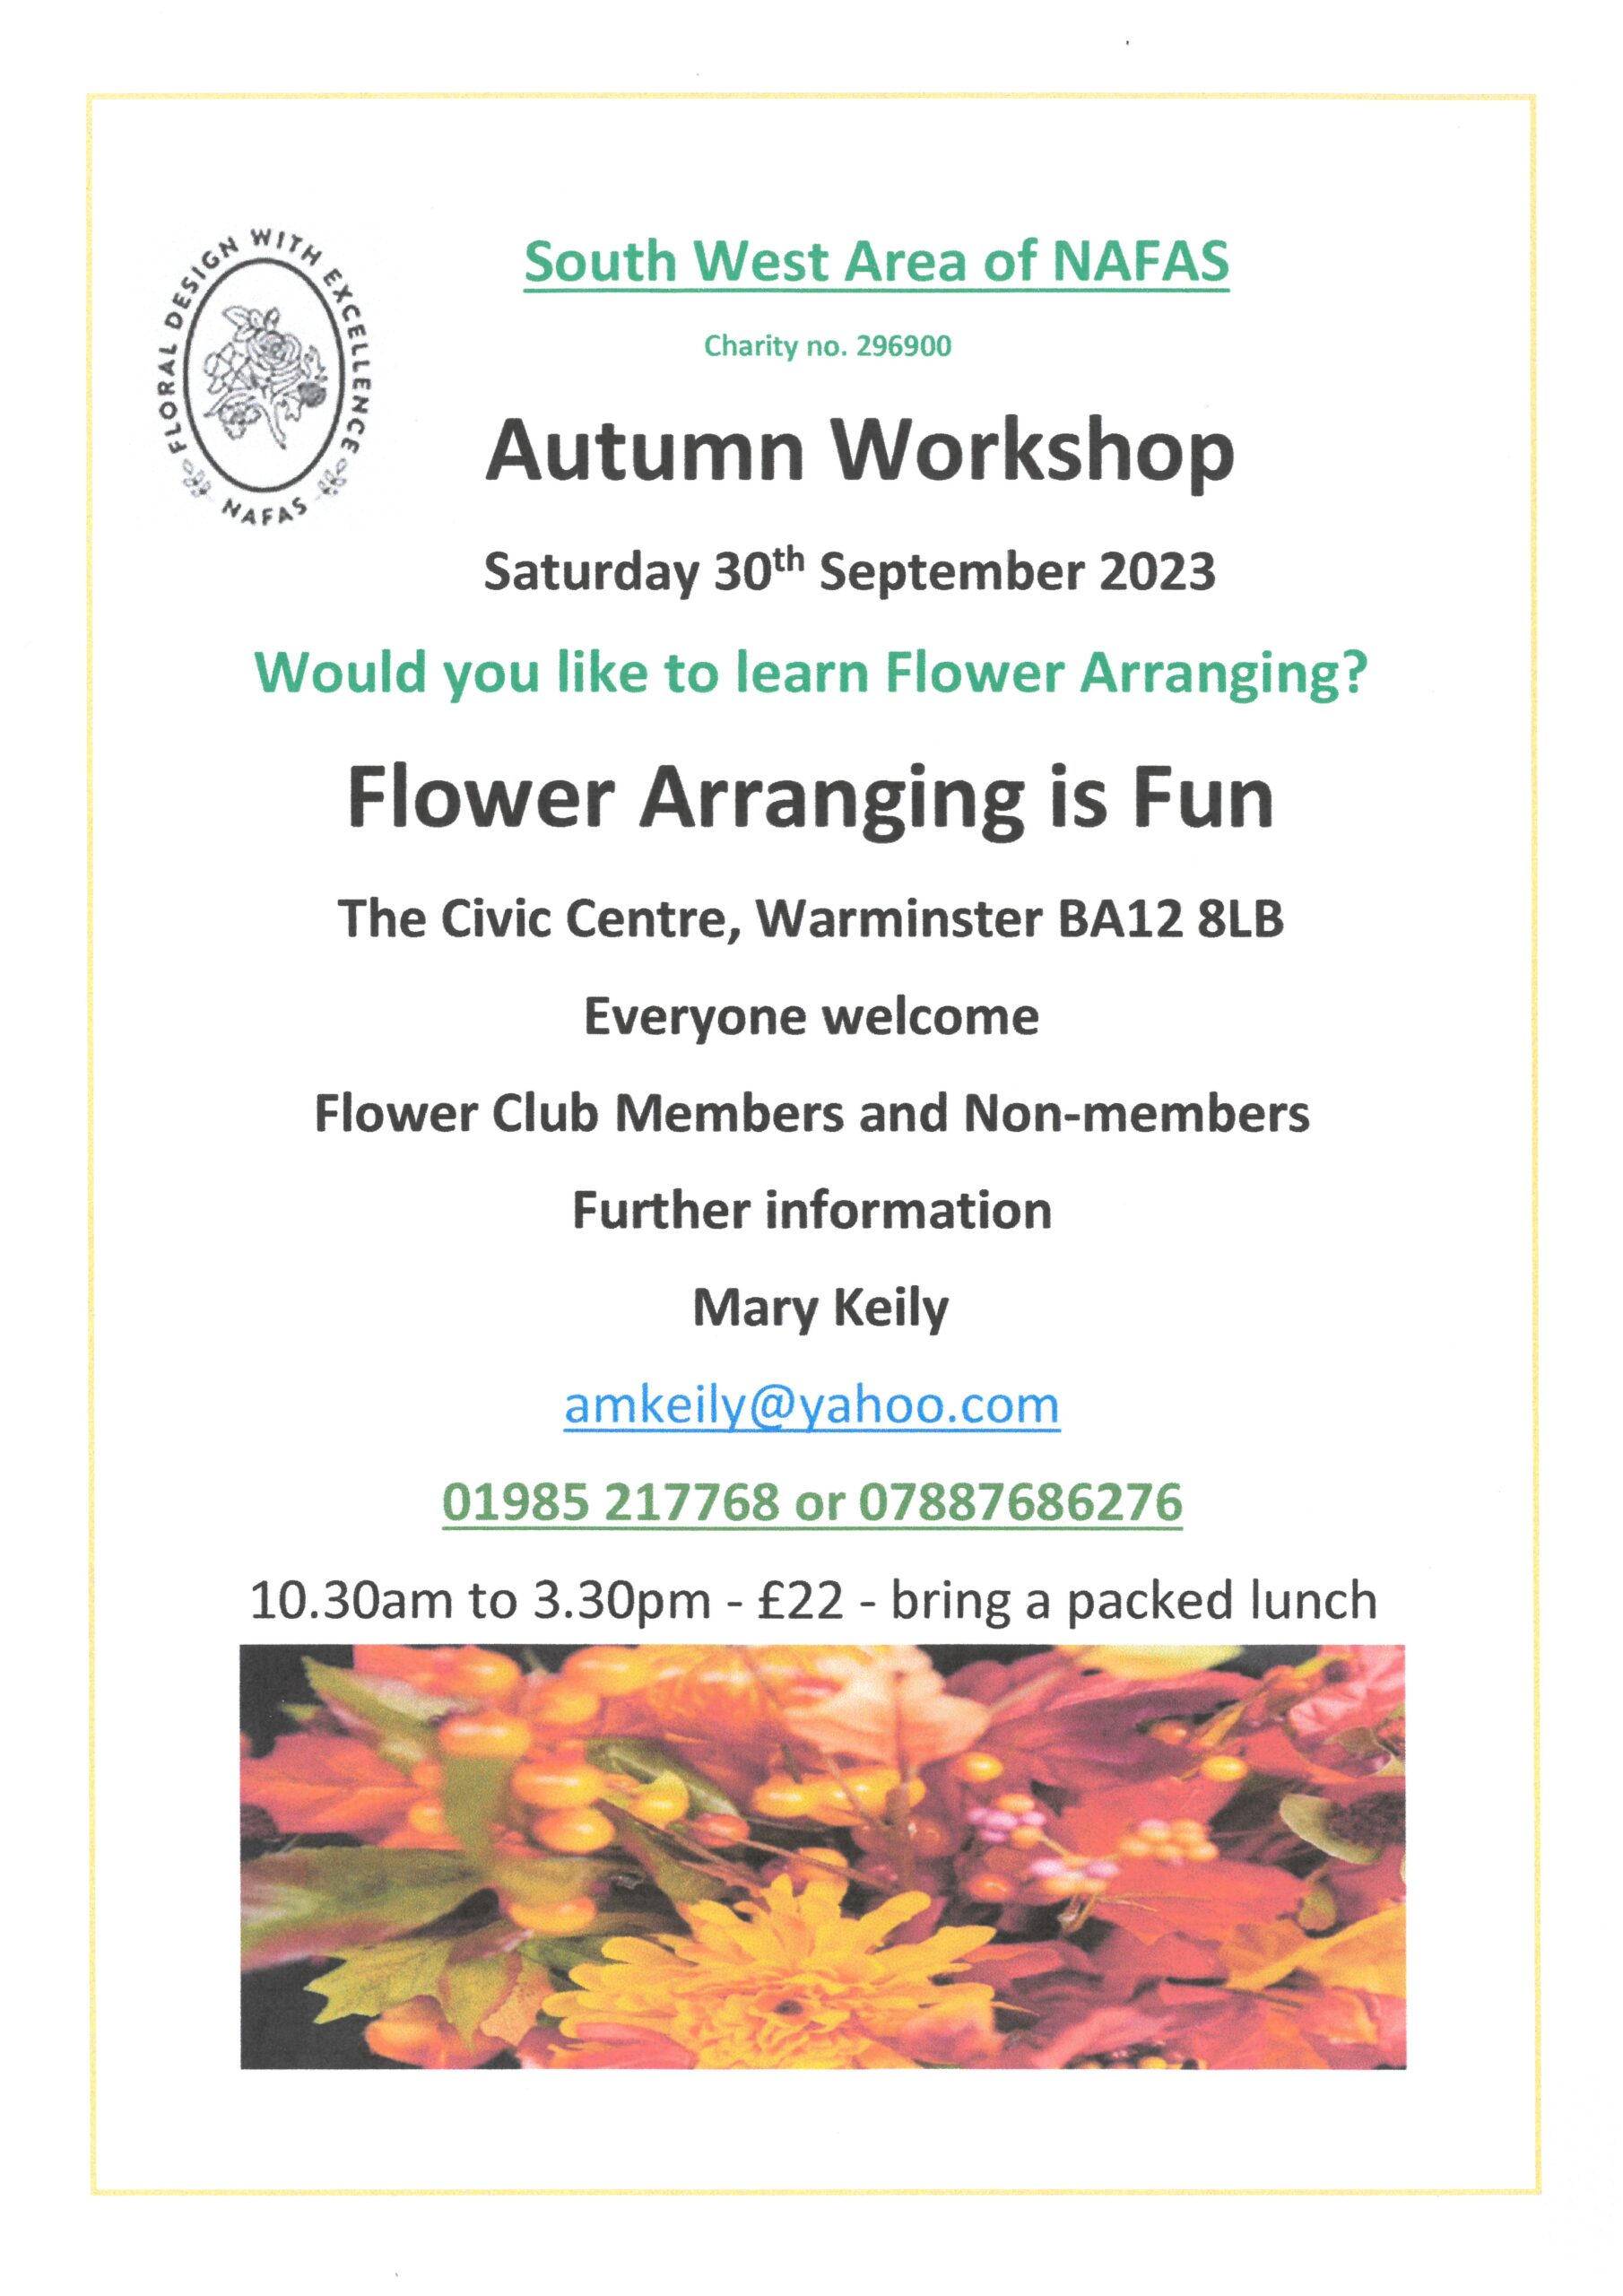 South West Area of NAFAS Autumn Flower Arranging Workshop